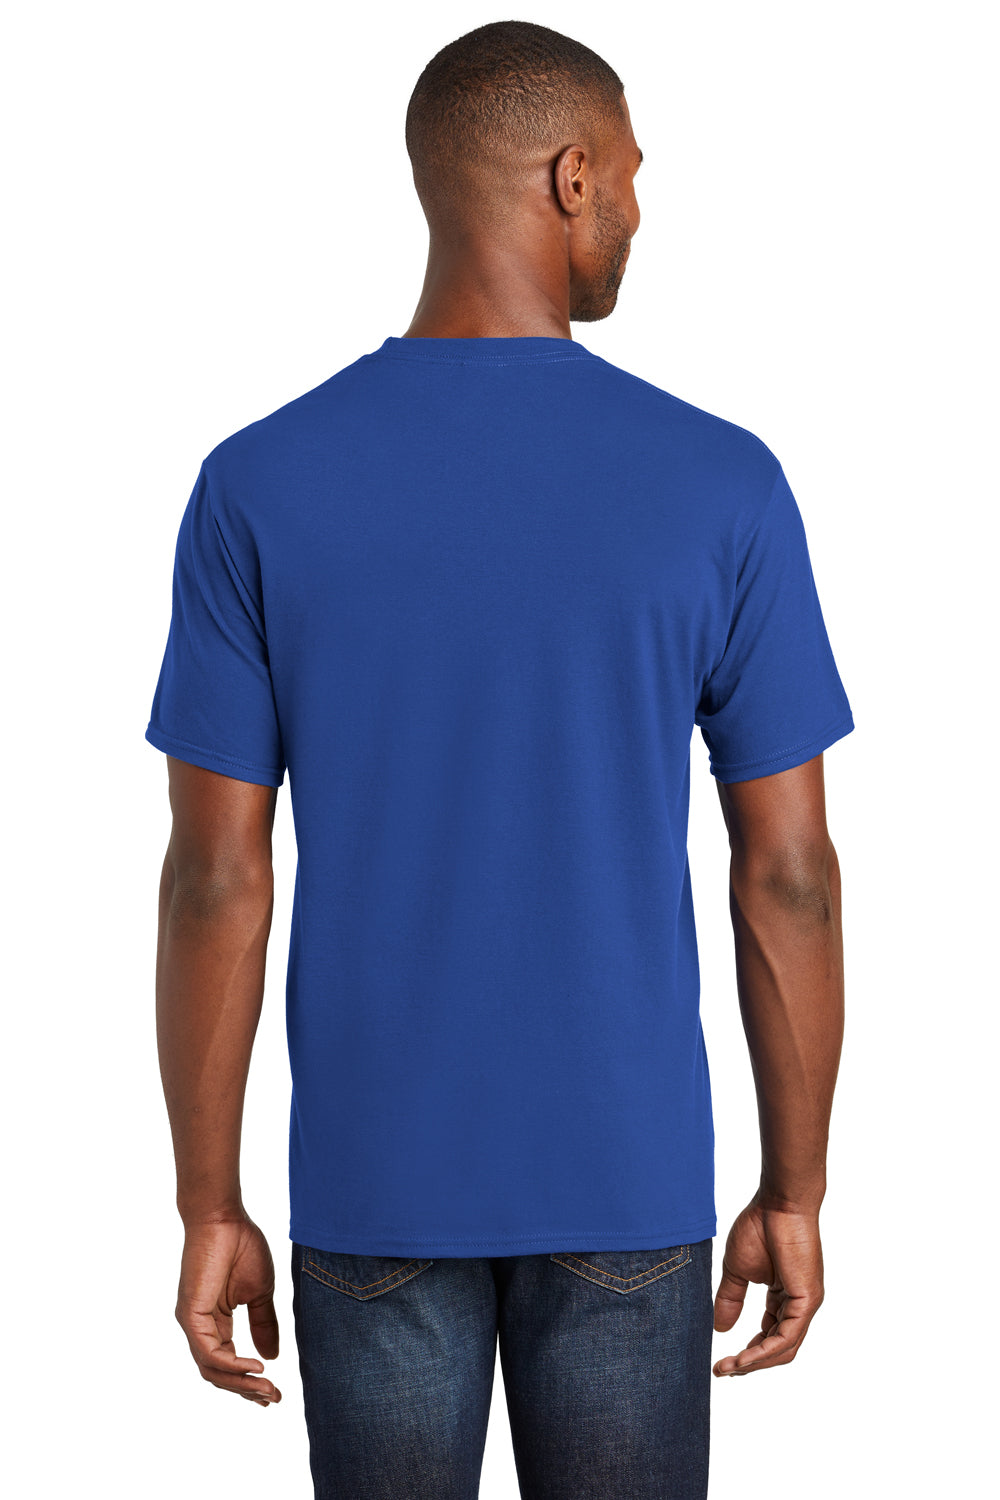 Port & Company PC450 Mens Fan Favorite Short Sleeve Crewneck T-Shirt Athletic Royal Blue Back